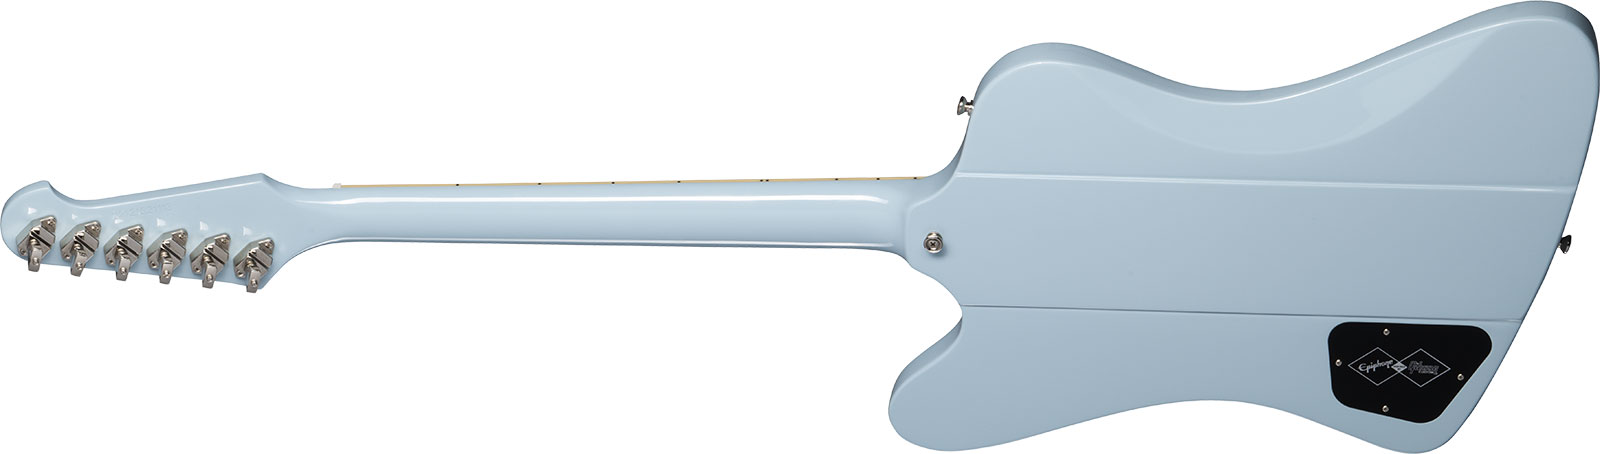 Epiphone Firebird V 1963 Maestro Vibrola Inspired By Gibson Custom 2mh Trem Lau - Frost Blue - Retro-Rock-E-Gitarre - Variation 1